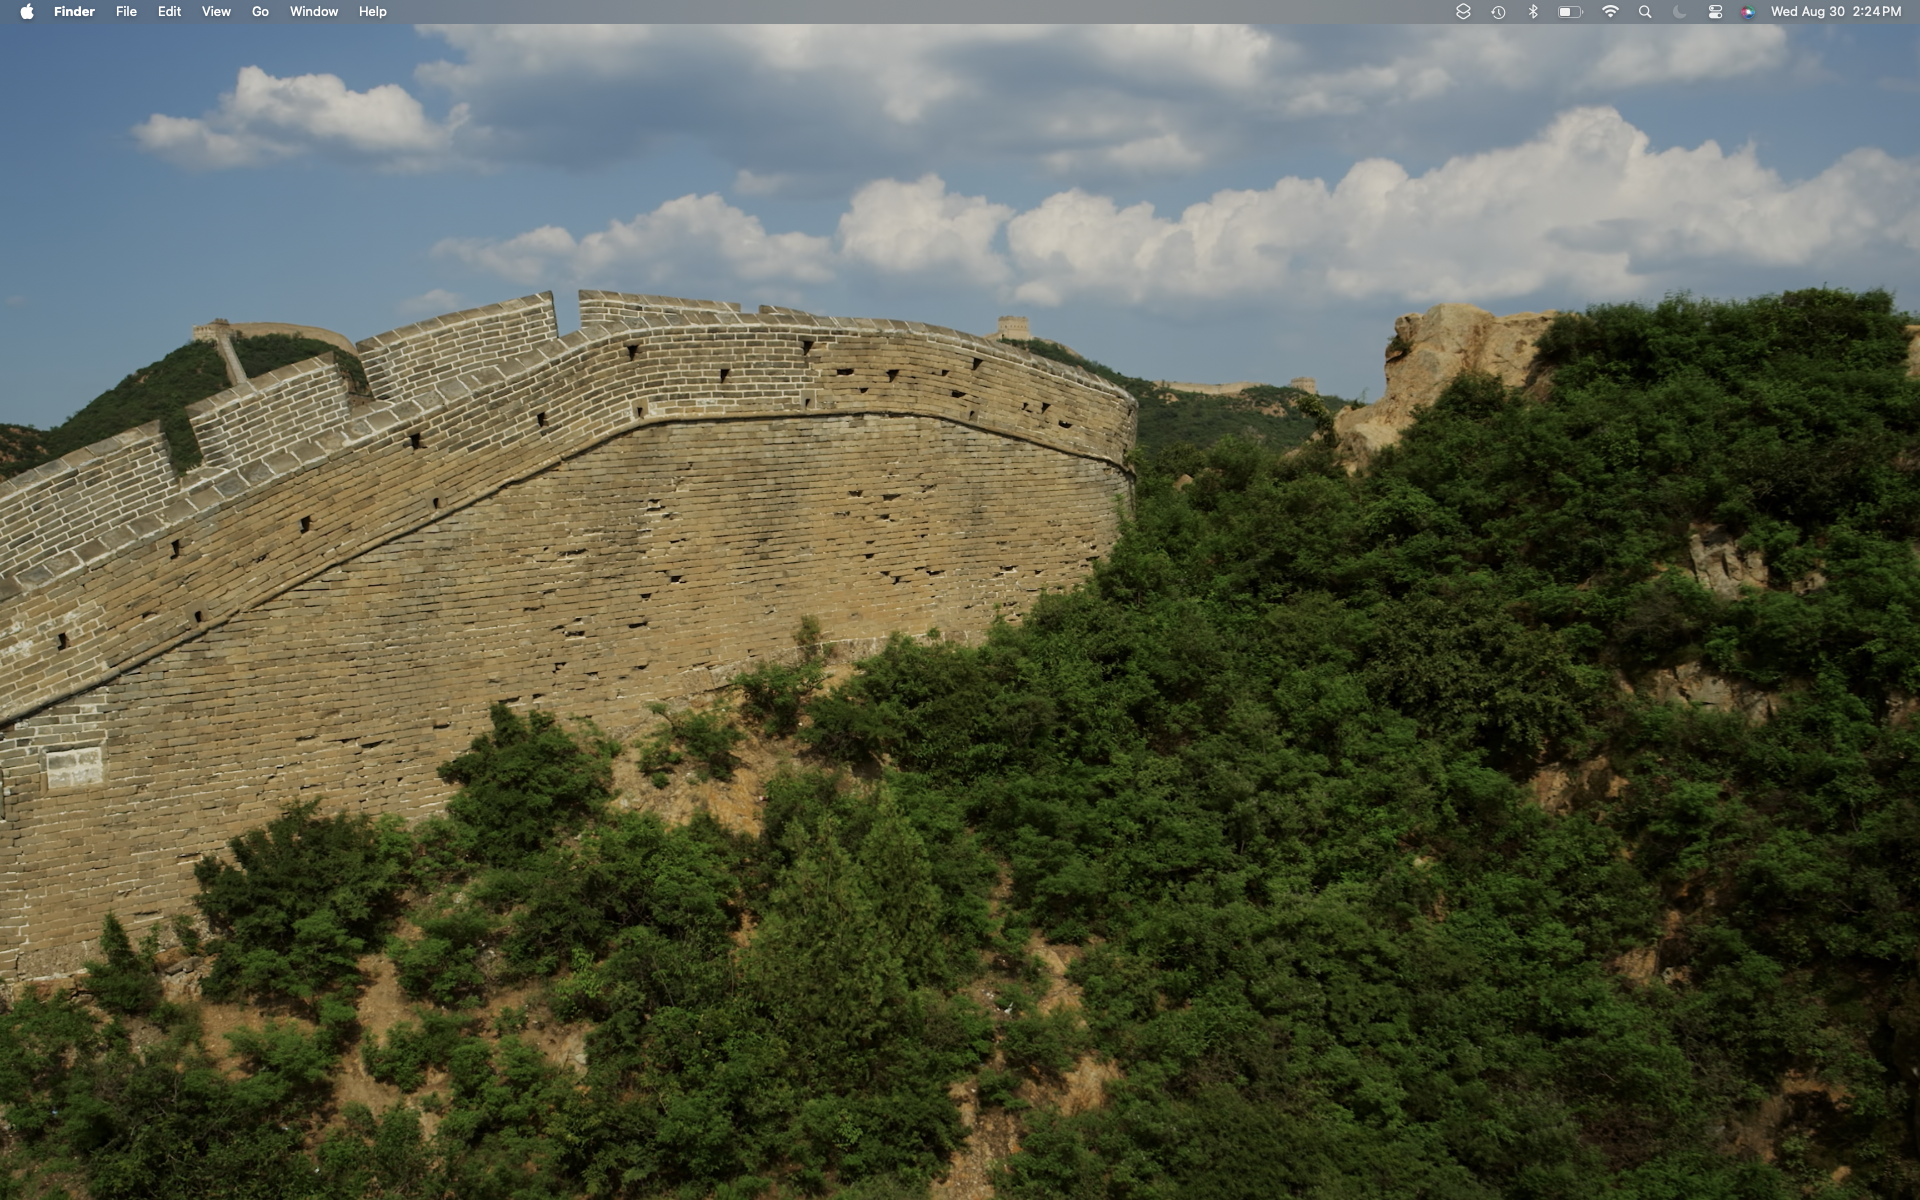 macOS Sonoma wallpaper: China's Great Wall Daylight